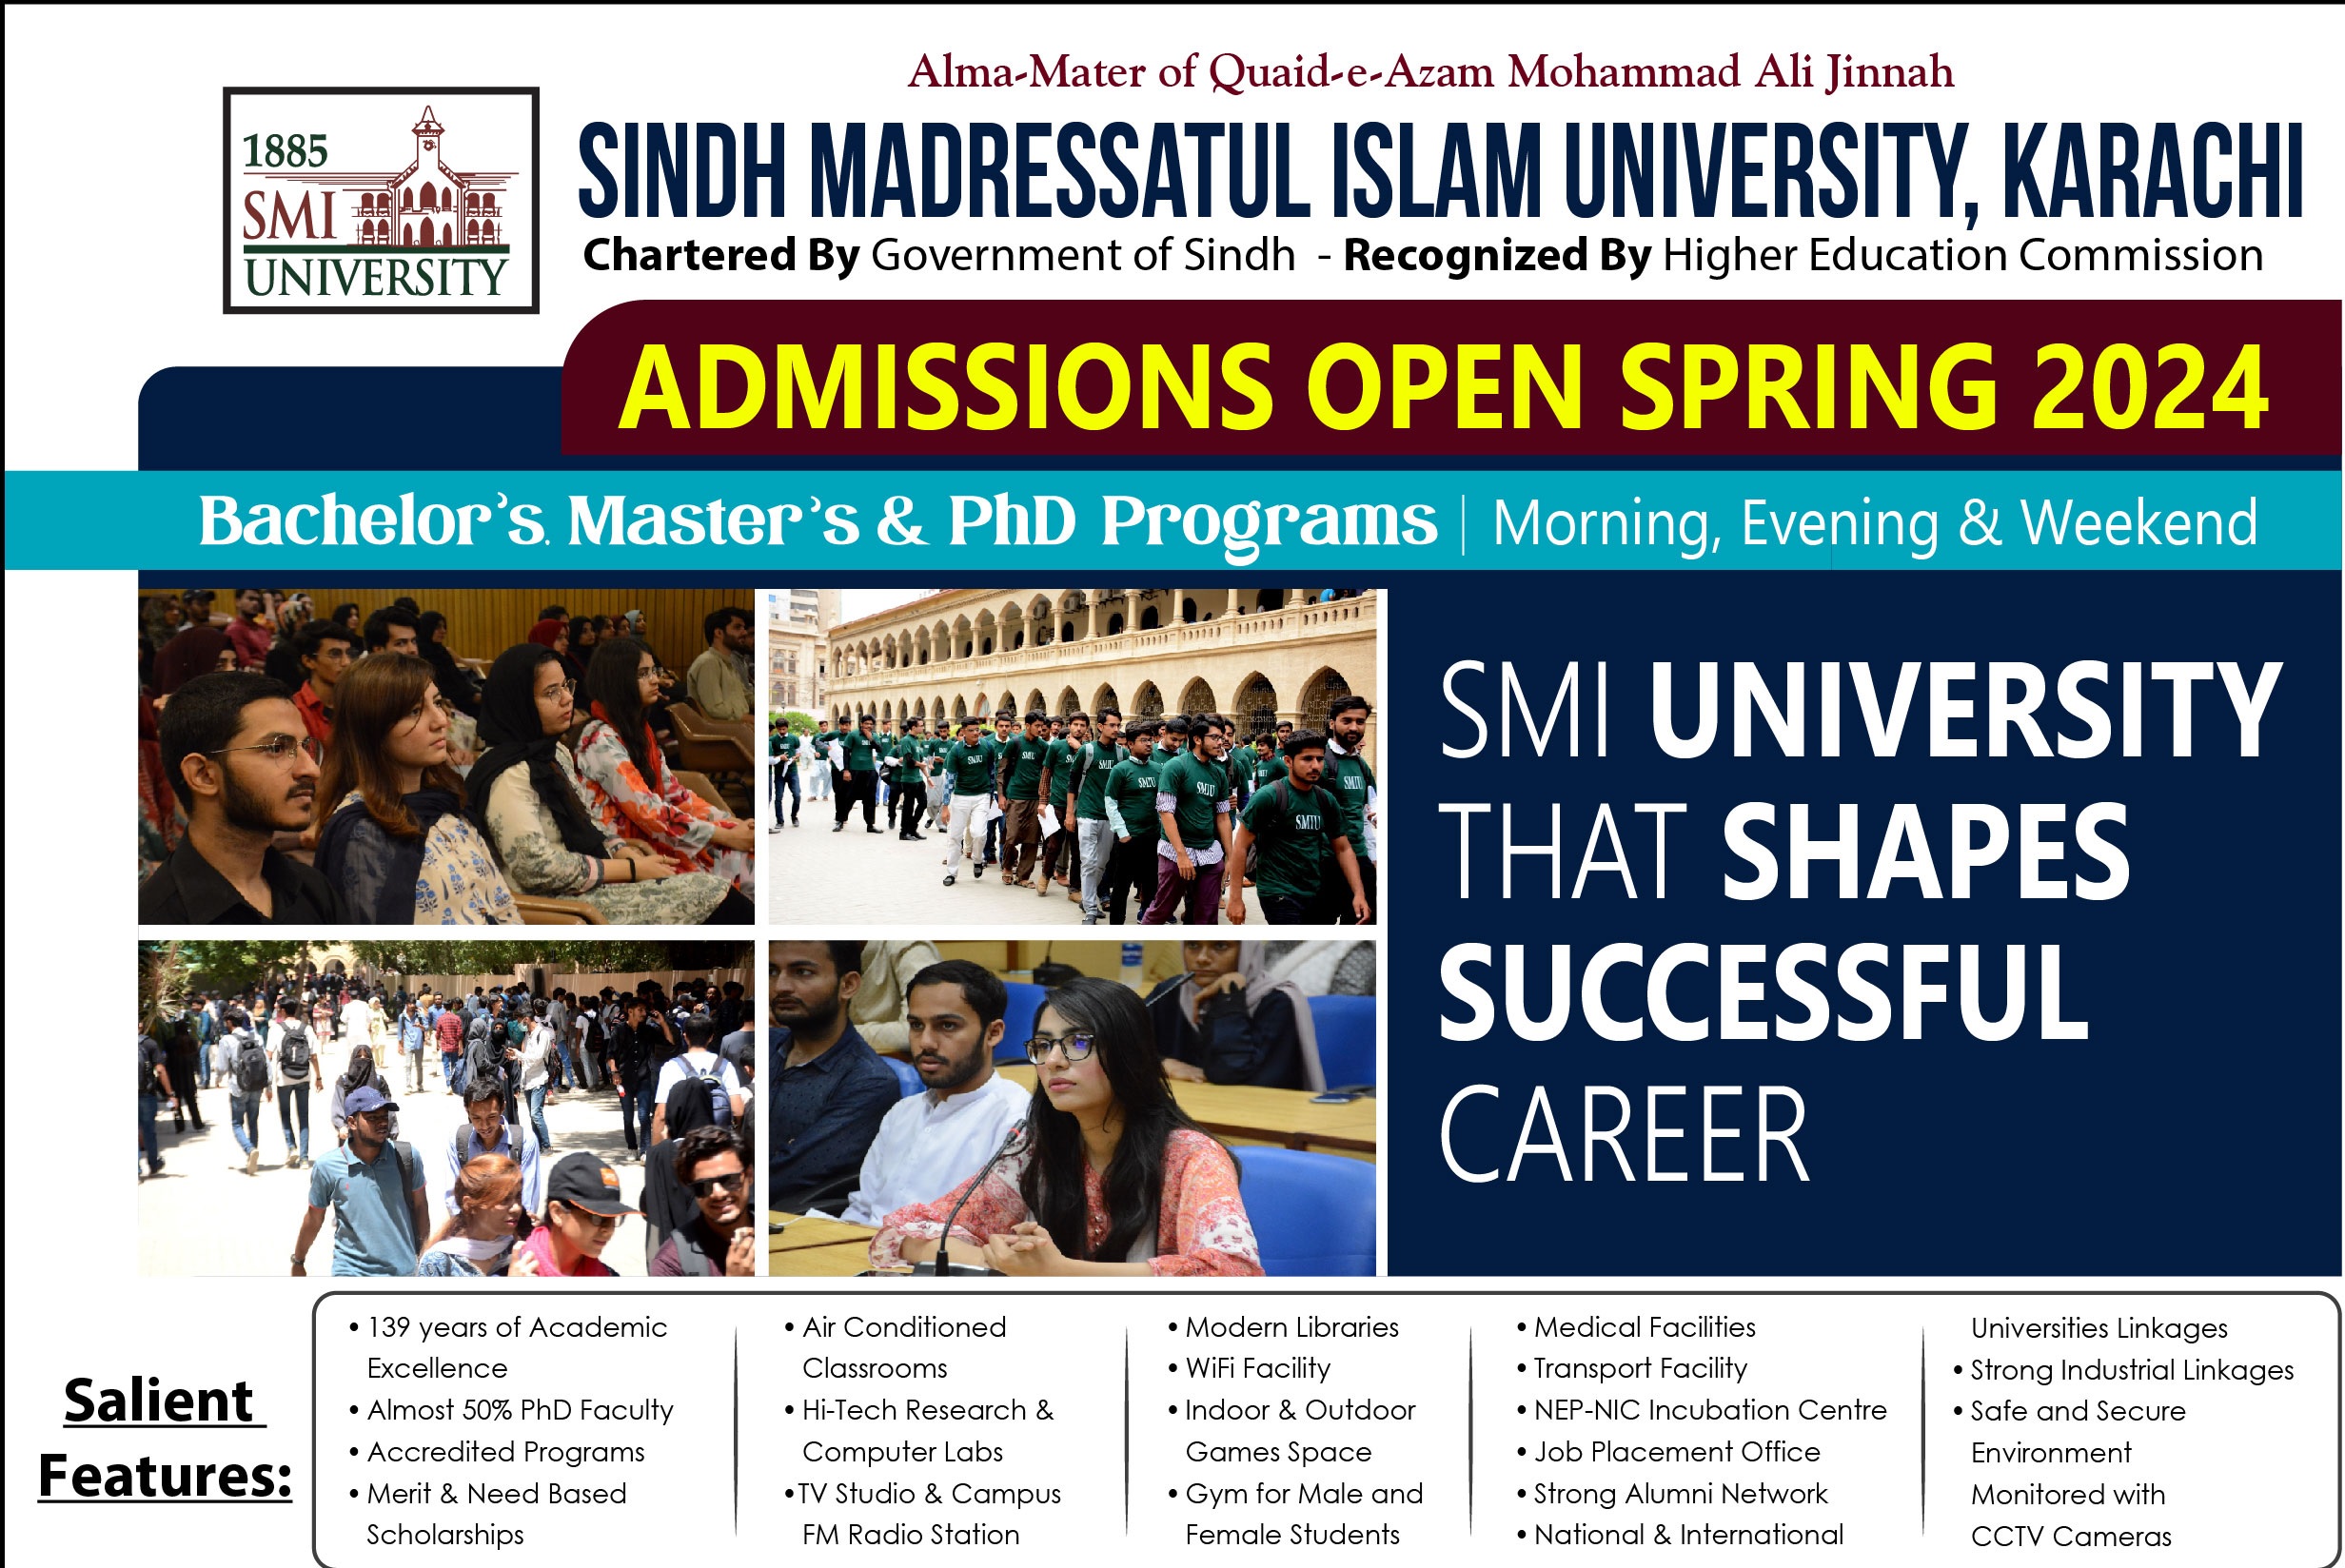 Sindh Madressatul Islam University Admission 2024 (Spring)